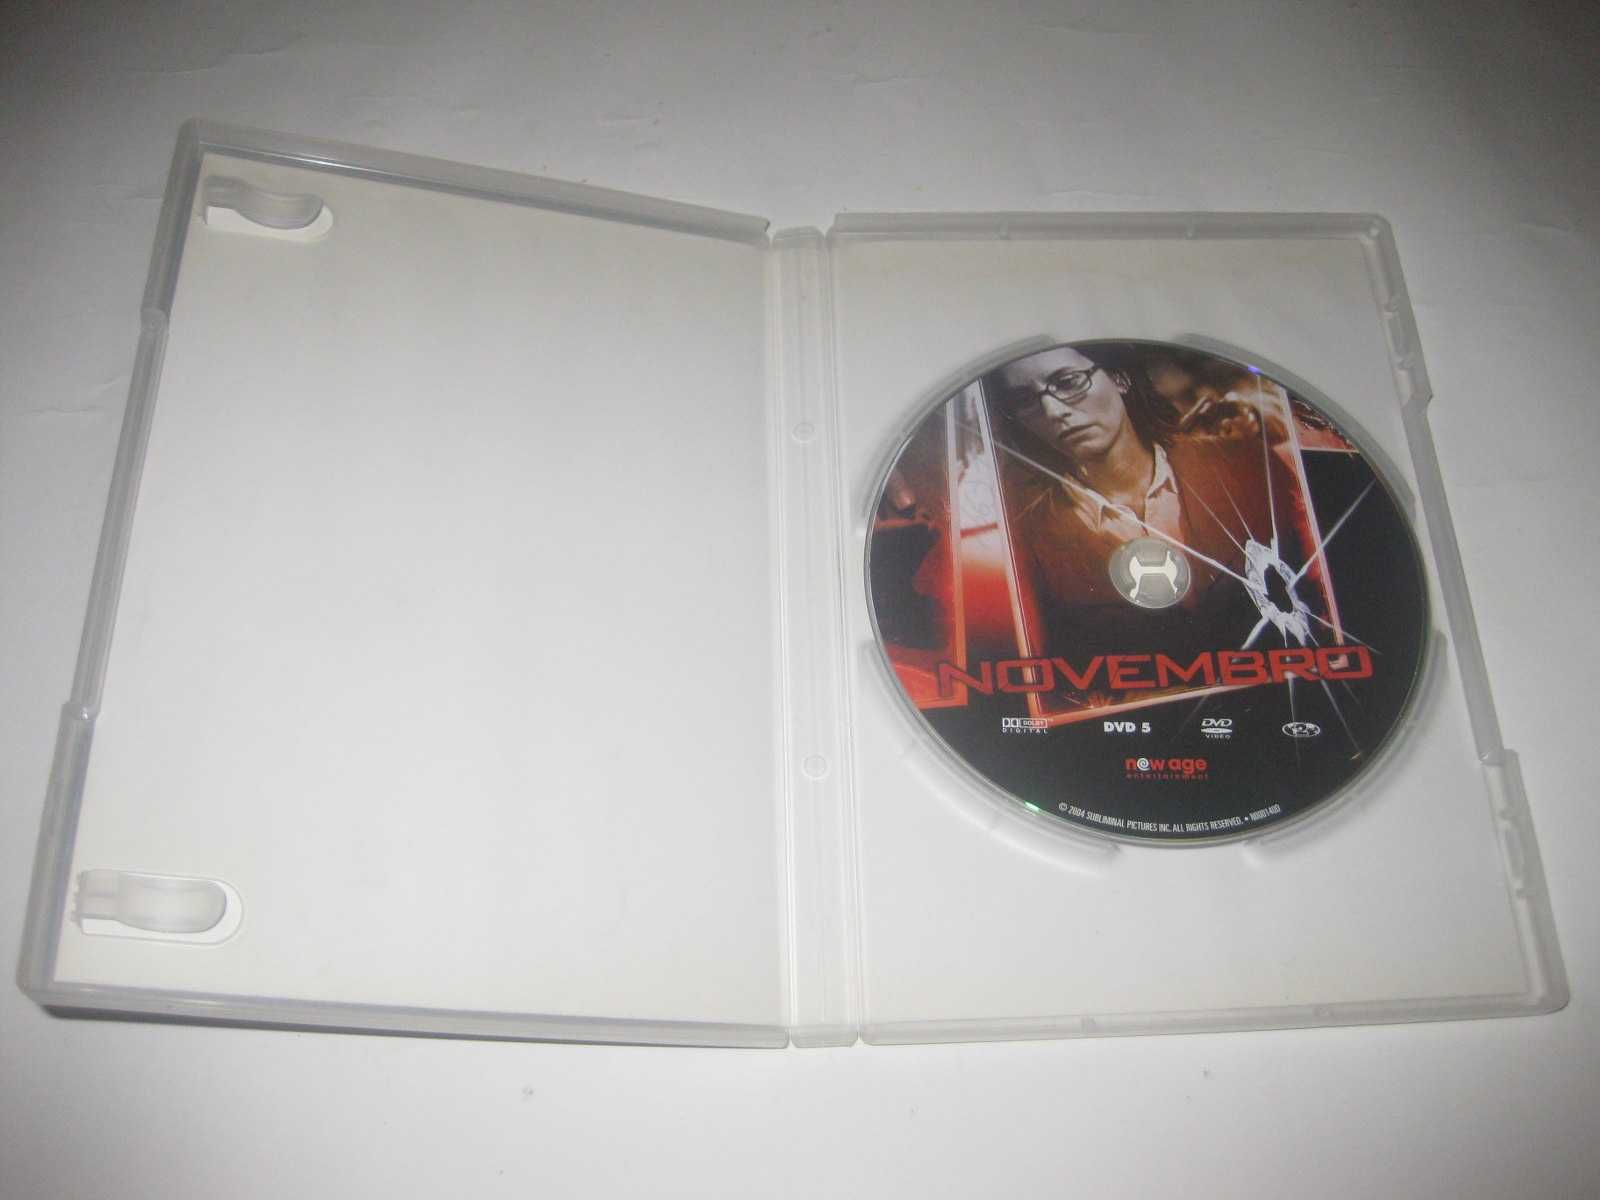 DVD "Novembro" com Courteney Cox/Raro!